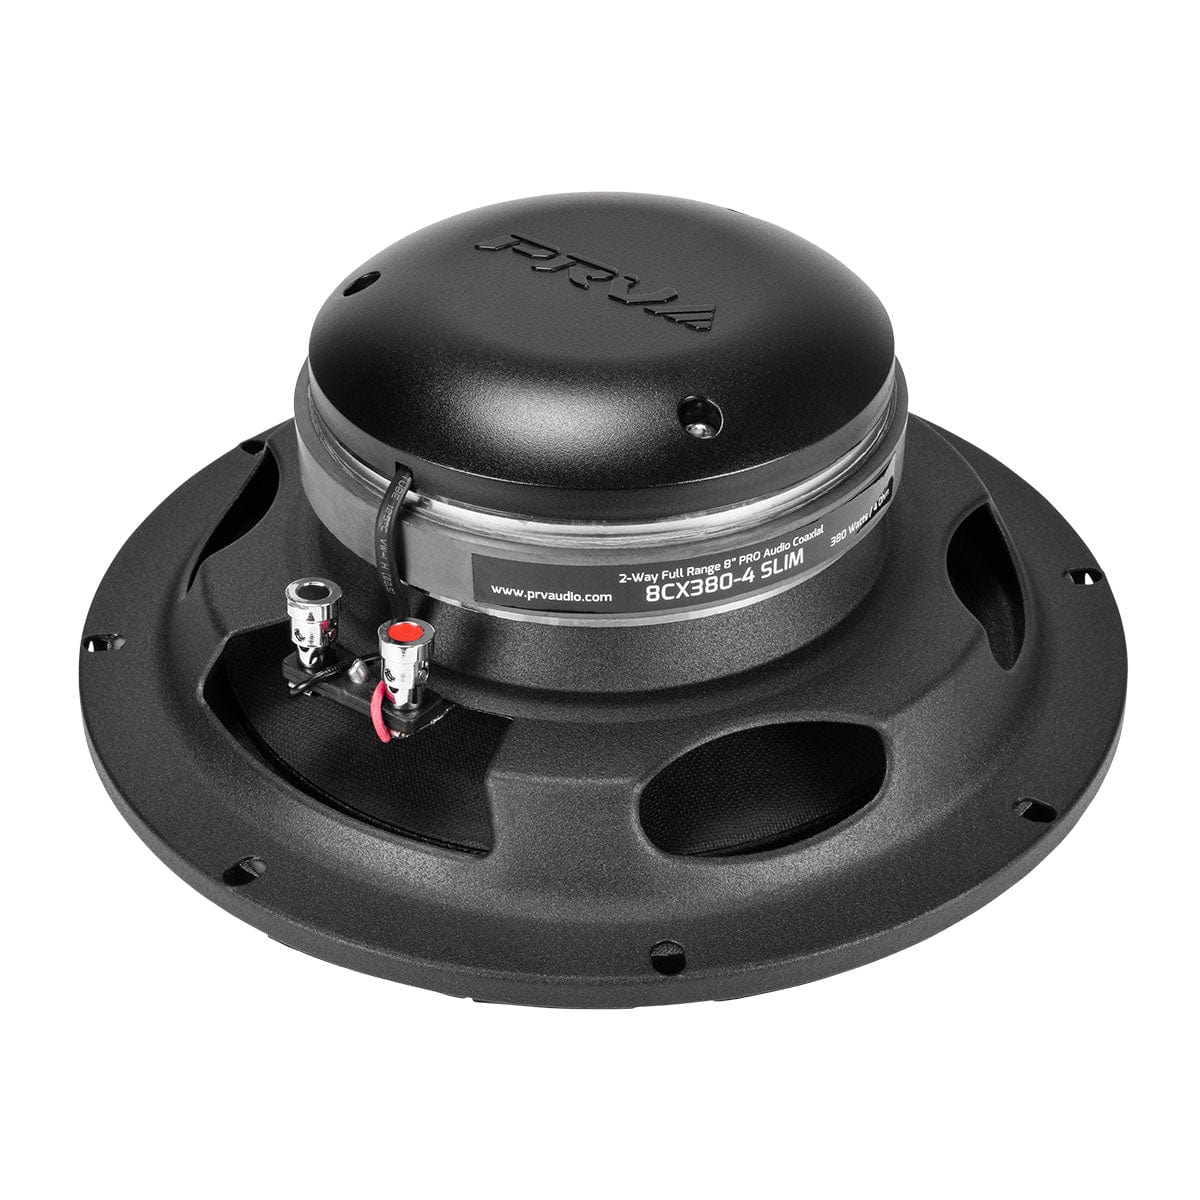 PRV Audio Speakers 6.5" Pro Coax PRV Audio 8CX380-4 SLIM Pro Coaxial Horn Speaker 8"